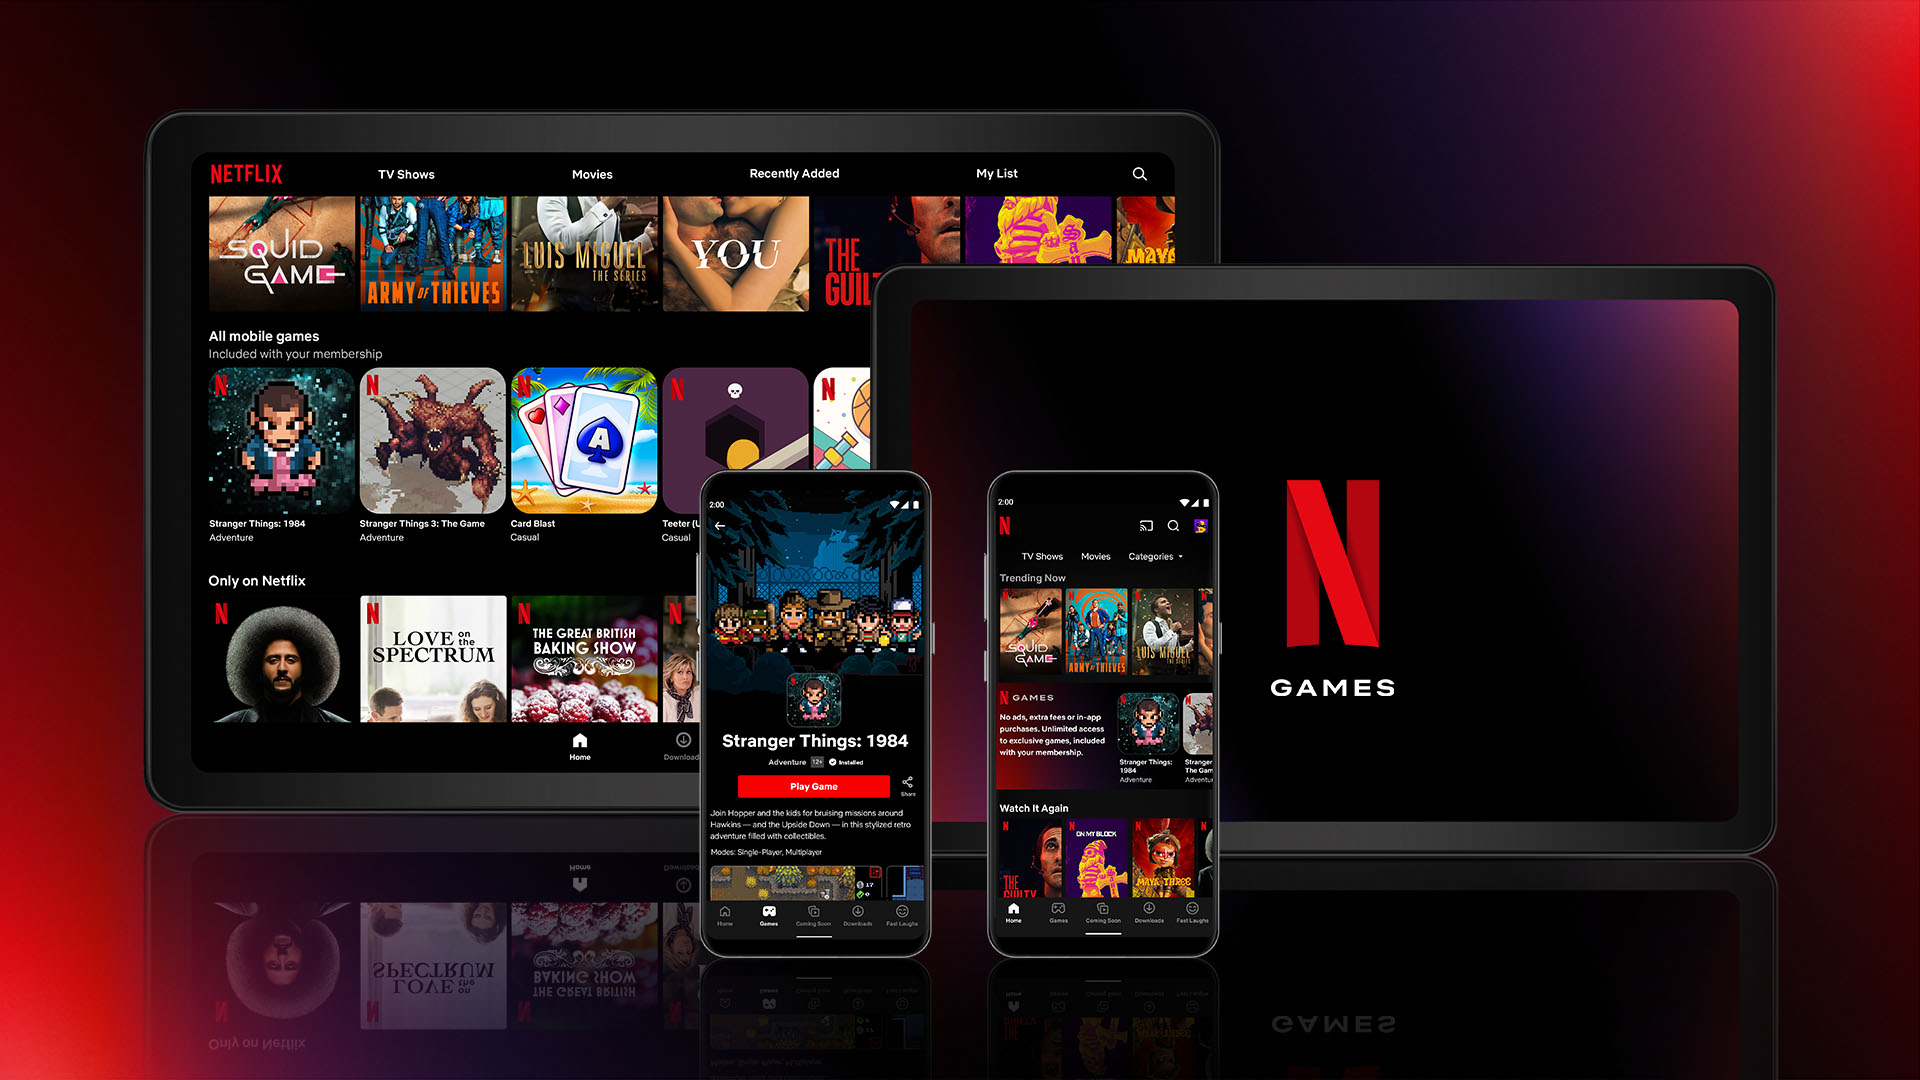 Netflix is building its own games studio